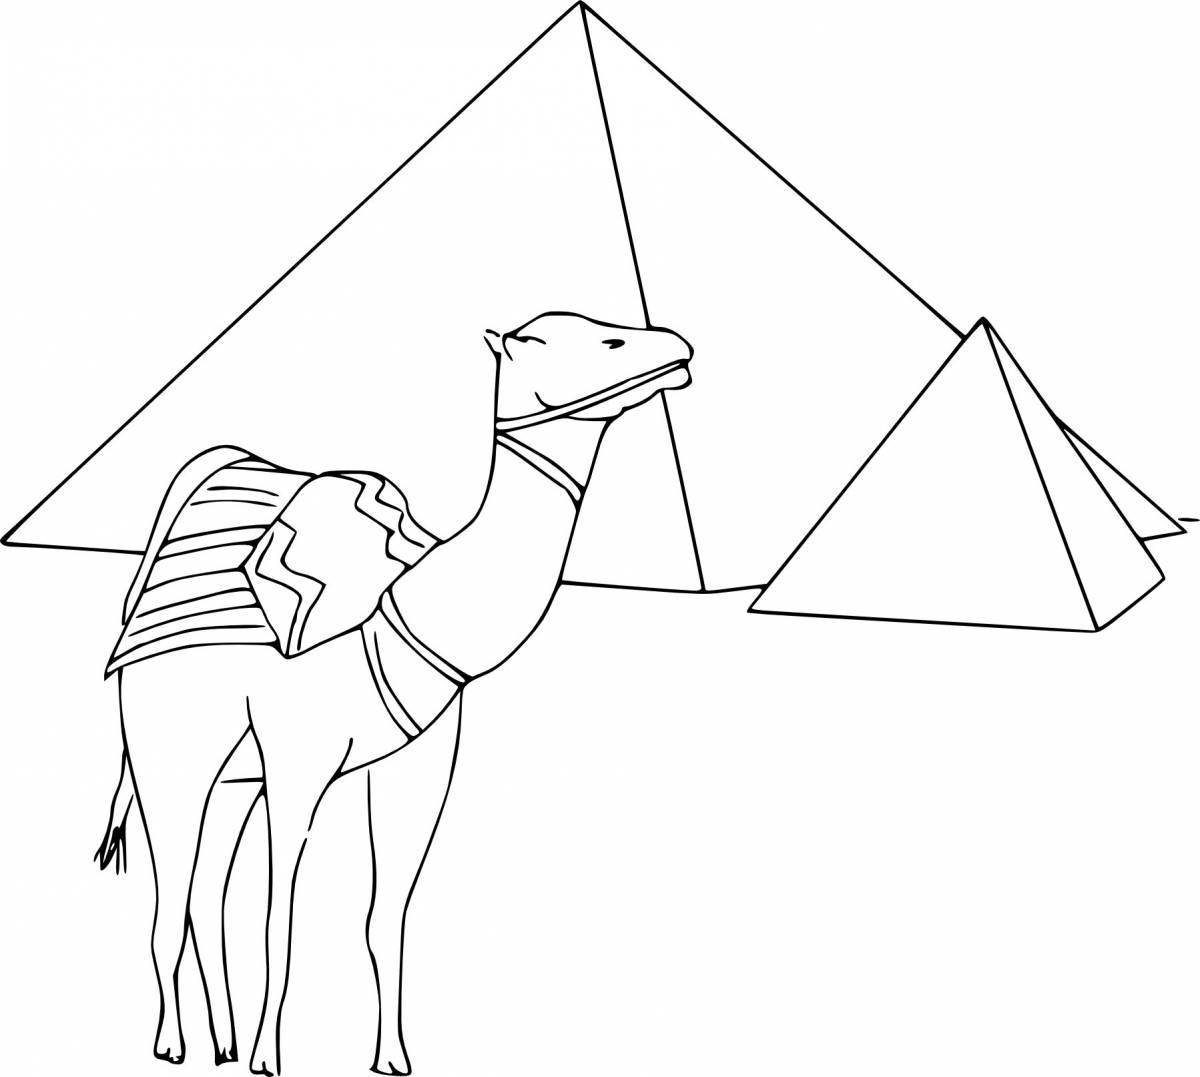 Splendorous coloring page каштан египетская пирамида